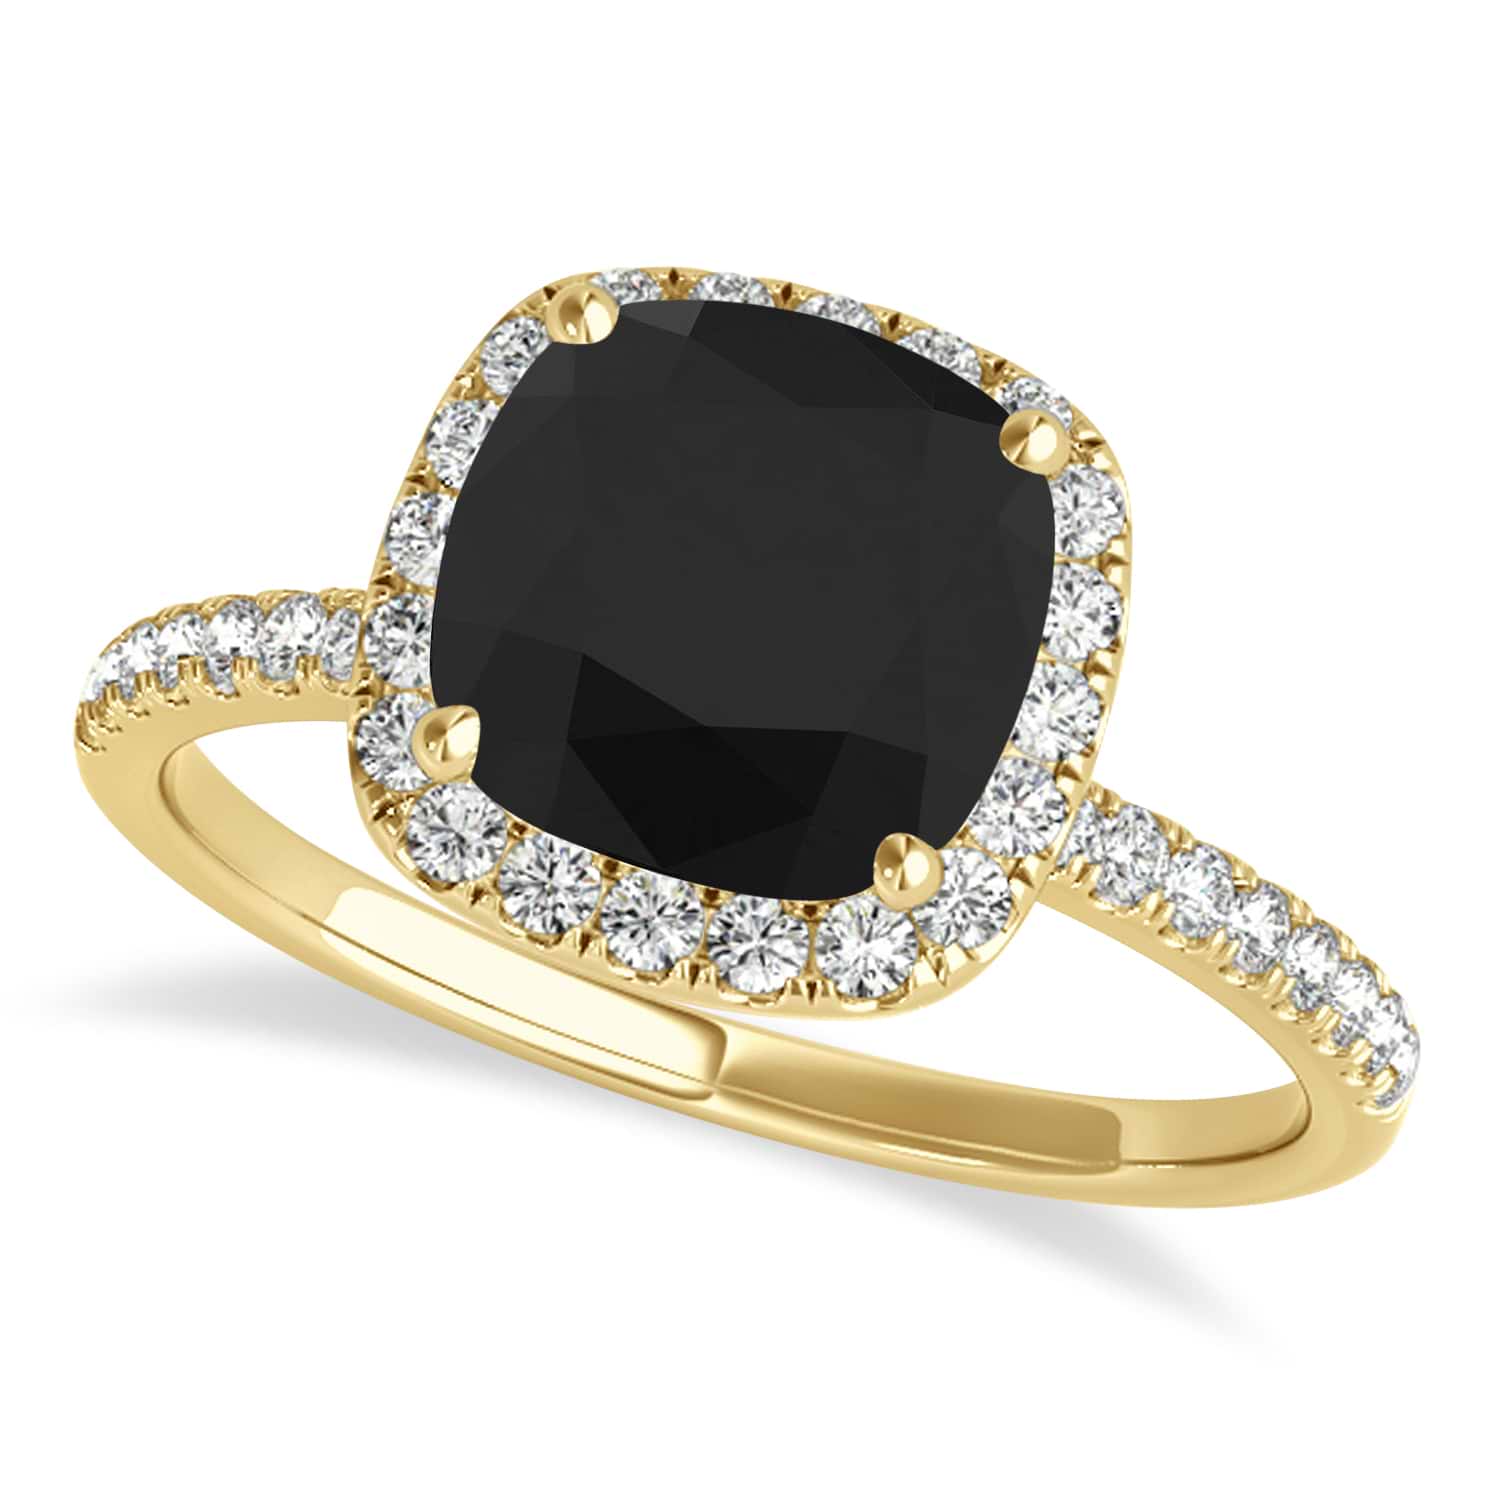 Cushion Black Diamond & Diamond Halo Engagement Ring French Pave 18k Y. Gold 1.58ct